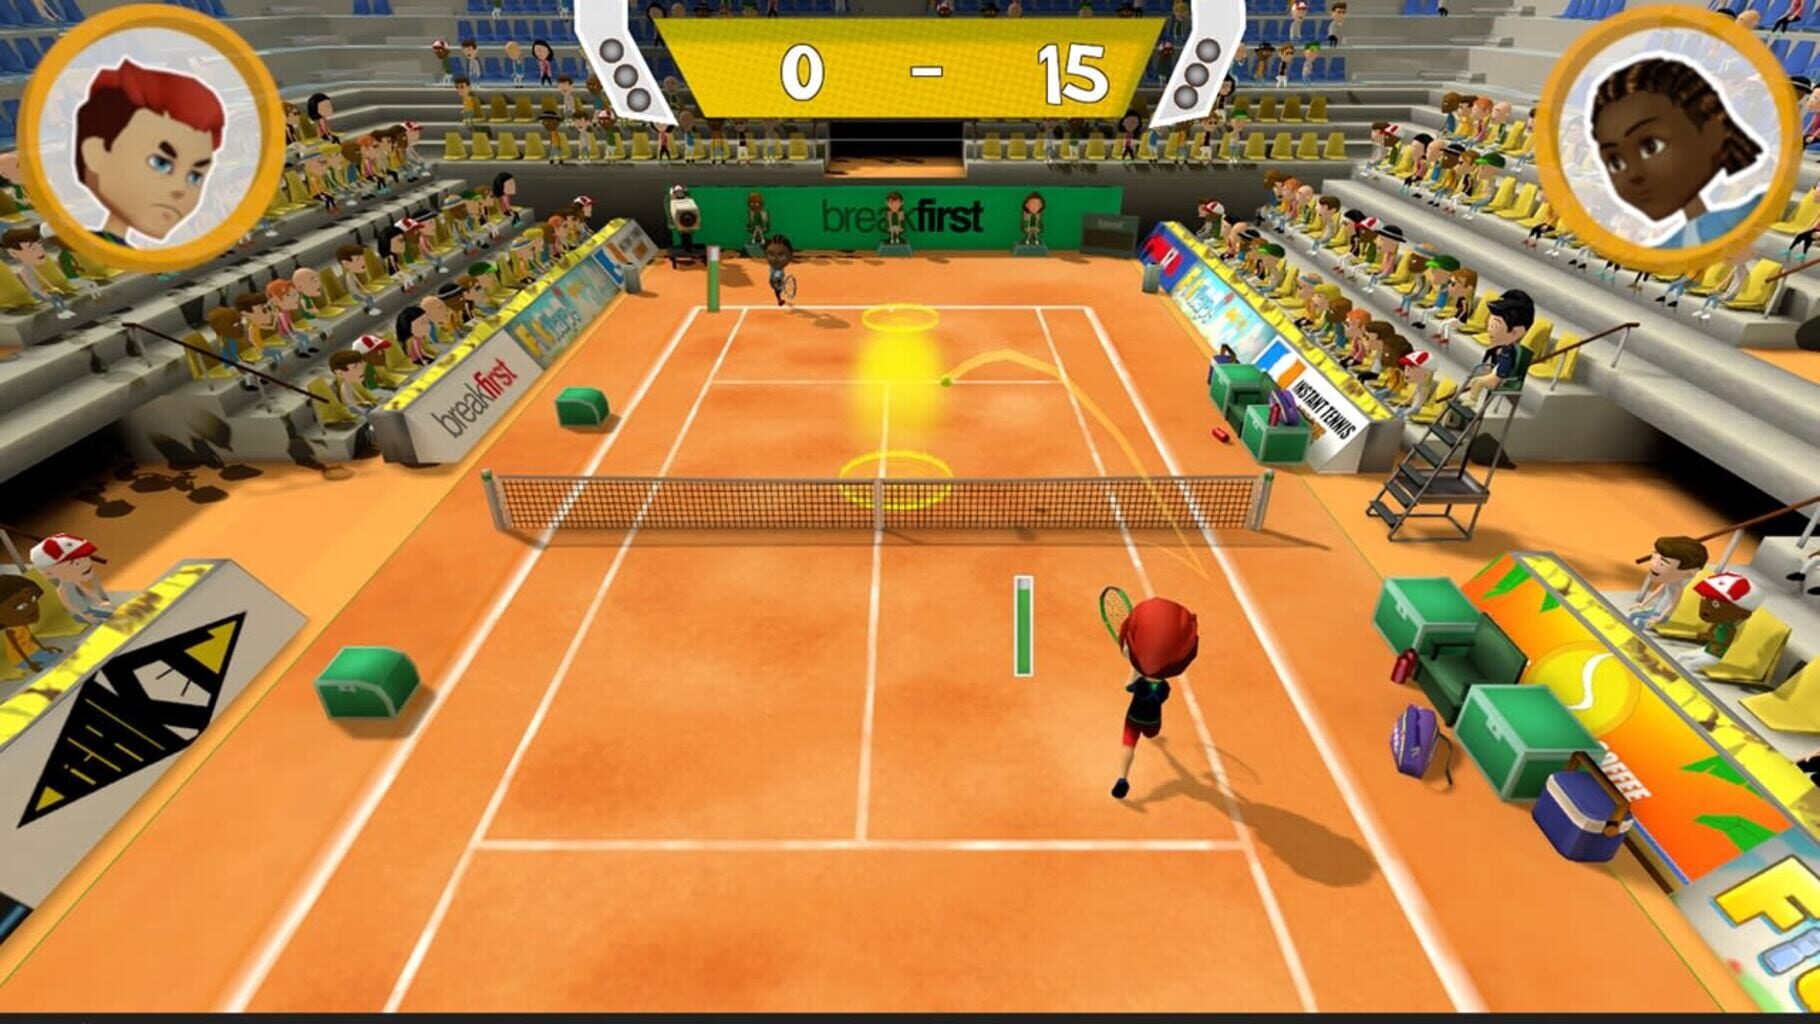 Instant Tennis screenshot